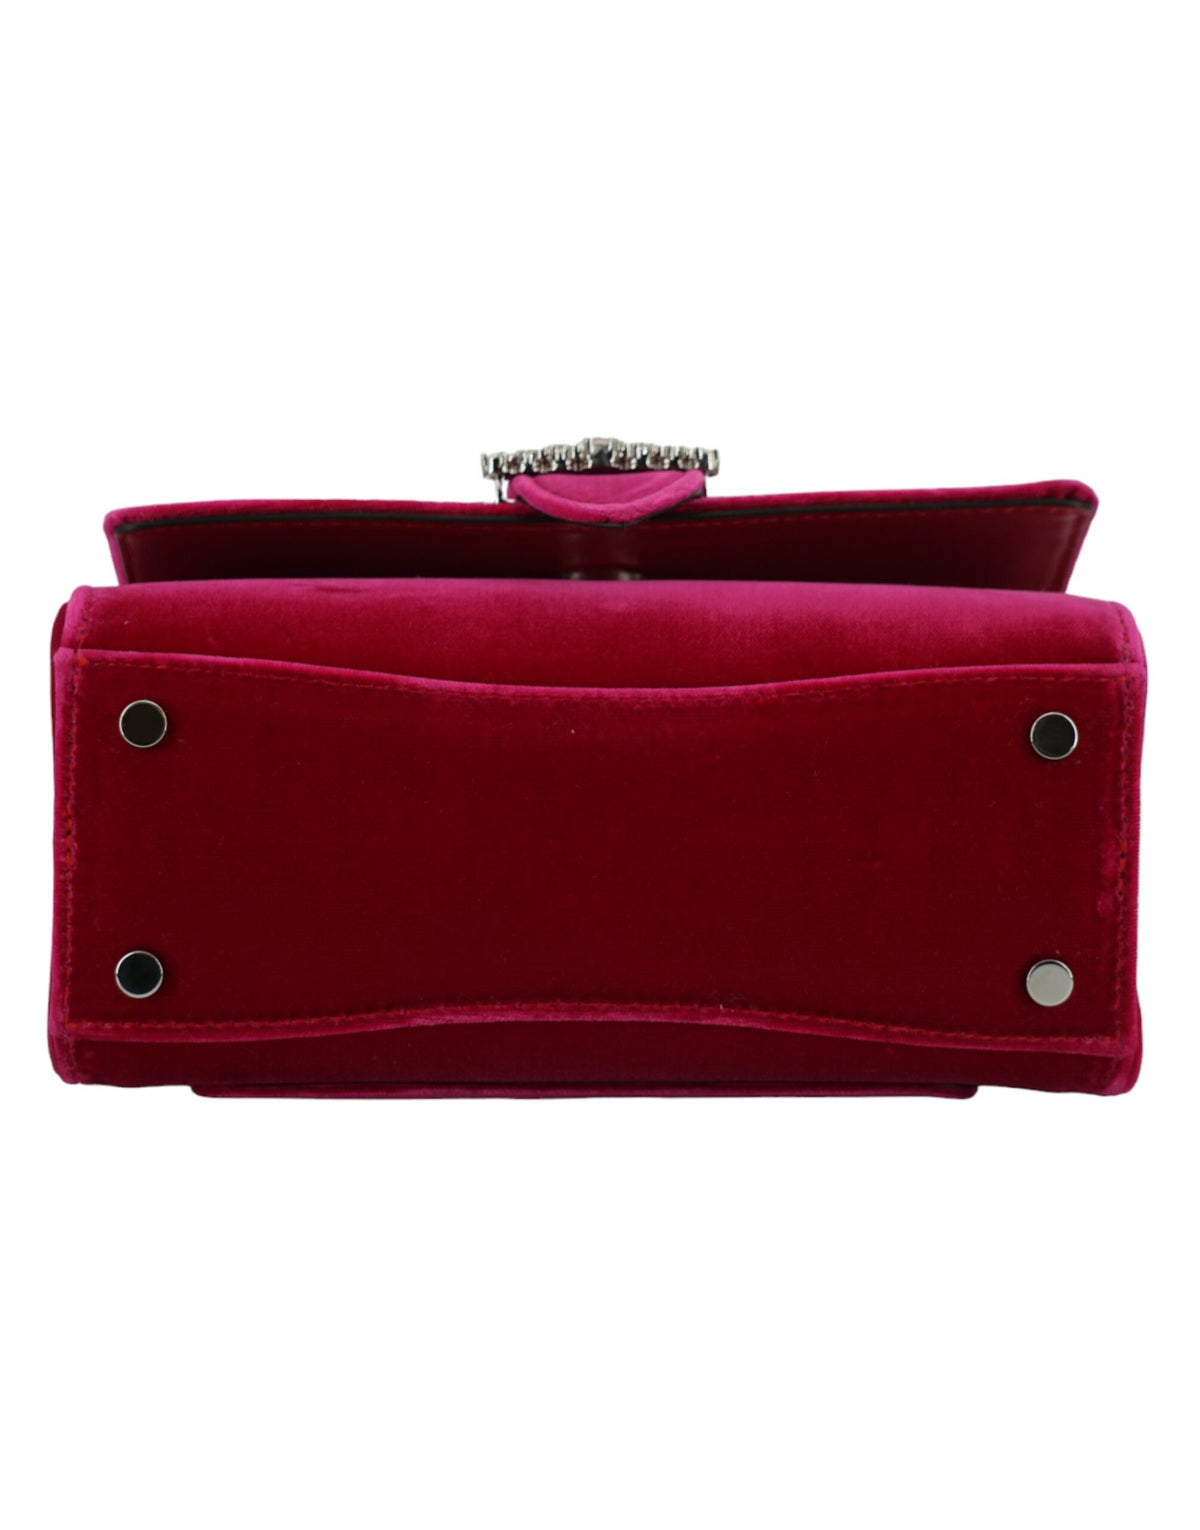 Jimmy Choo Pink Leather and Satin Top Handle Shoulder Bag